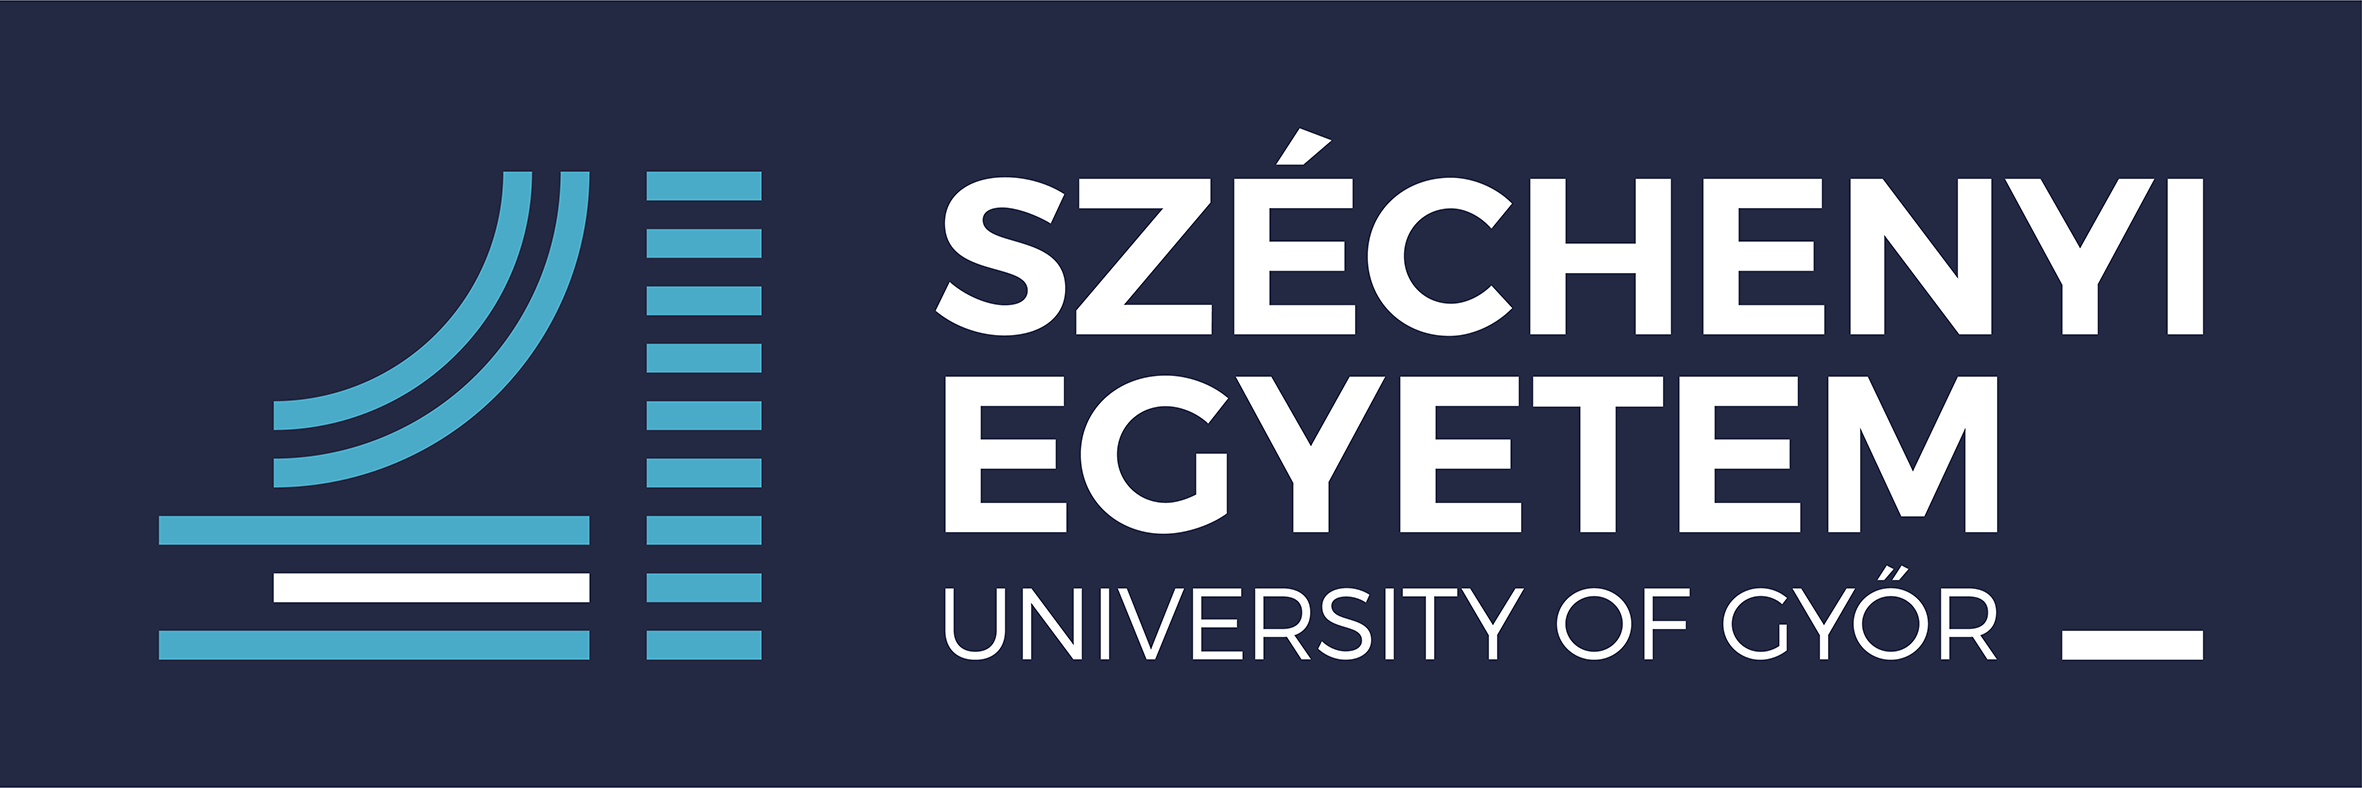 Szechenyi Istvan University of Gyor